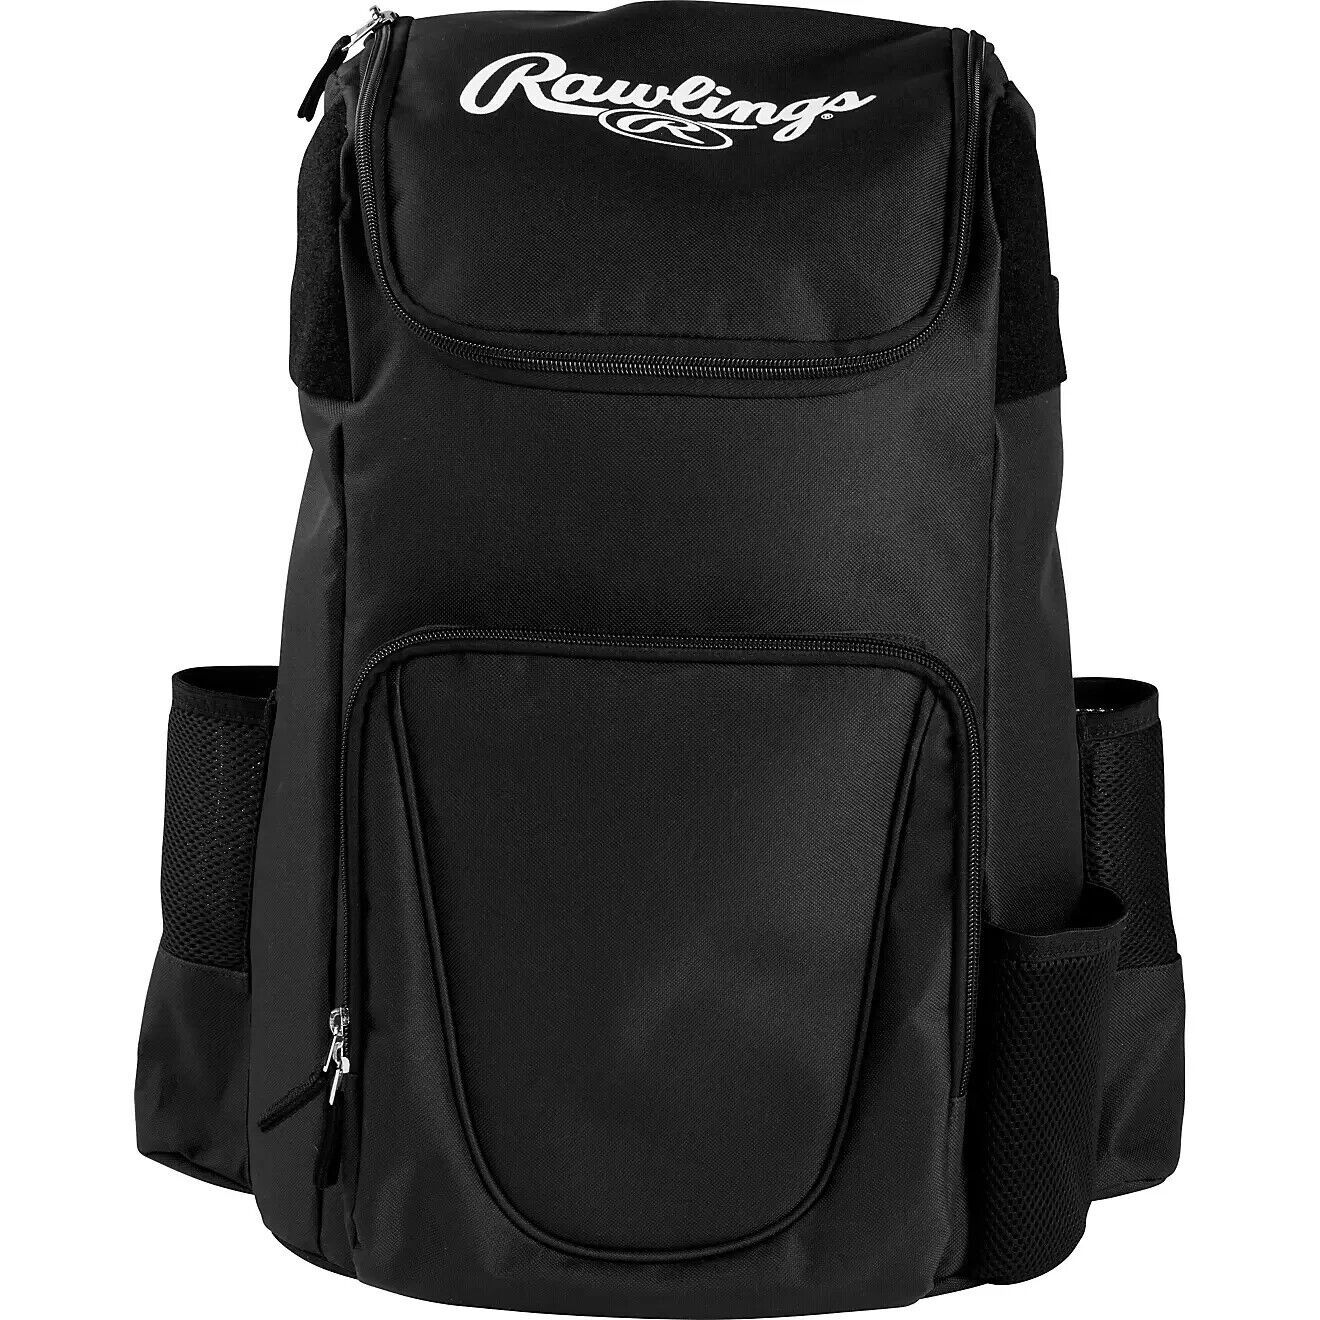 Rawlings Kids' R250 Player's Backpack - $34.64